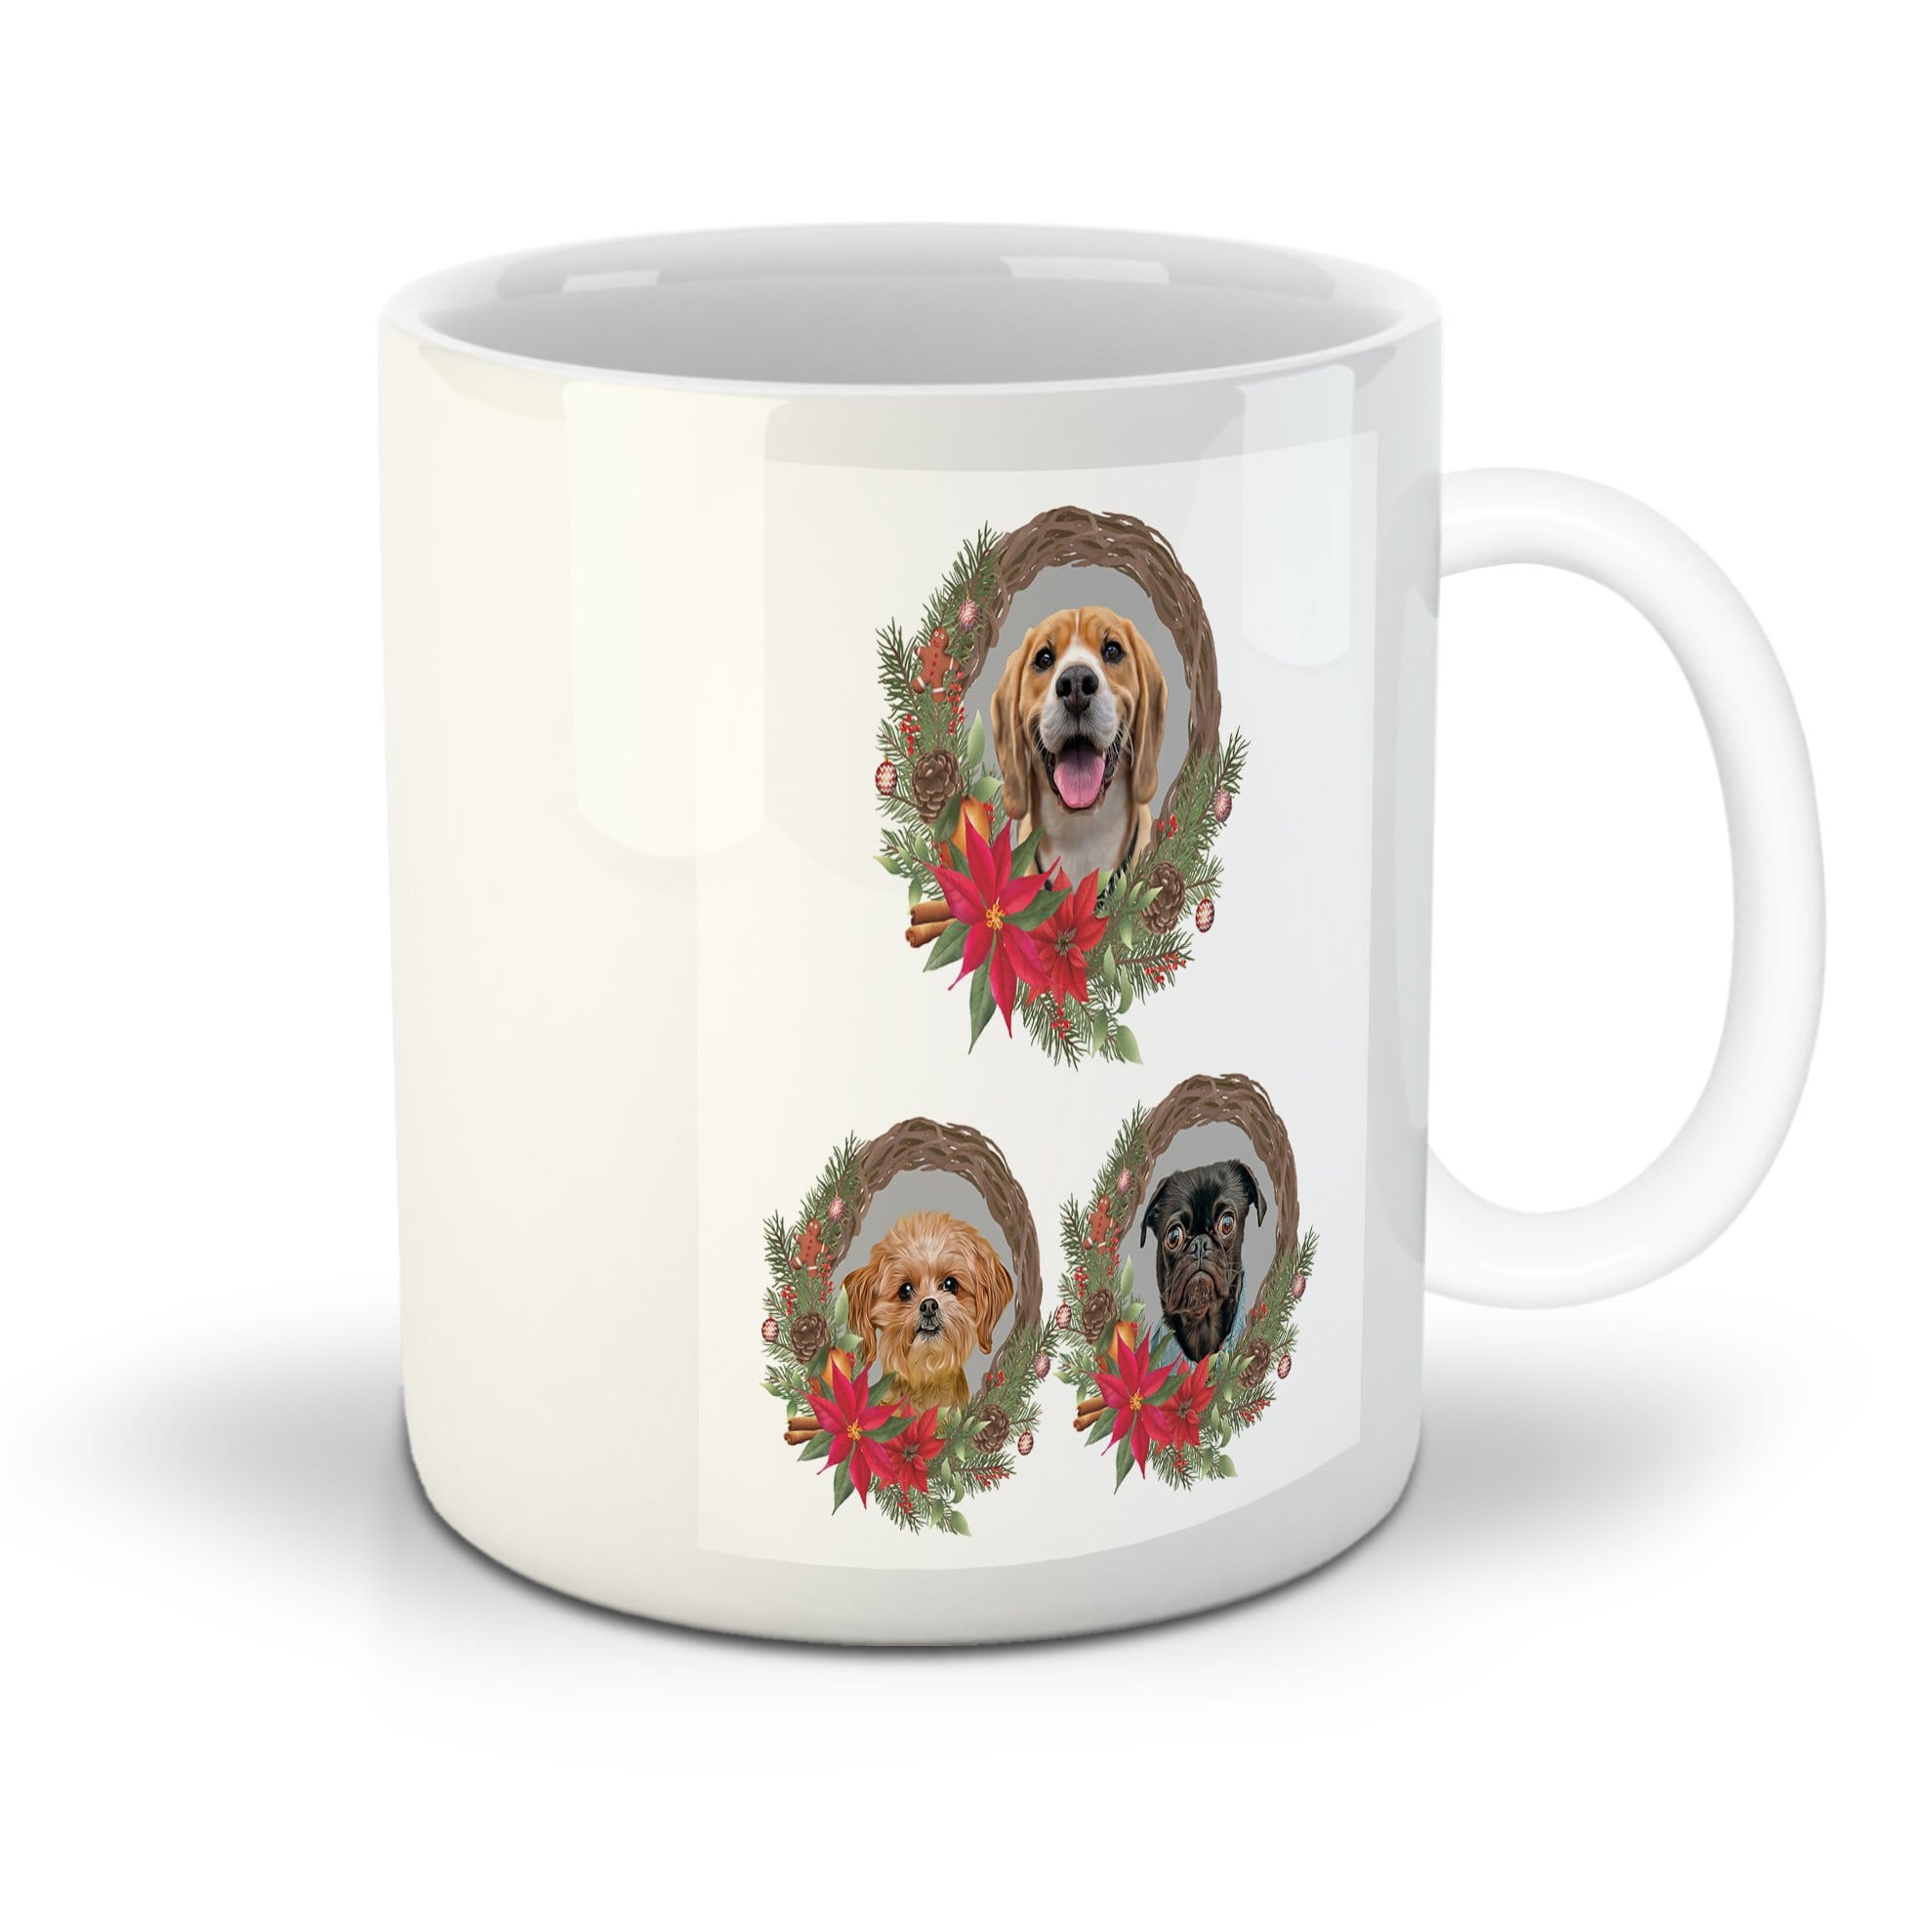 3 Pet Personalized Christmas Wreath Mug